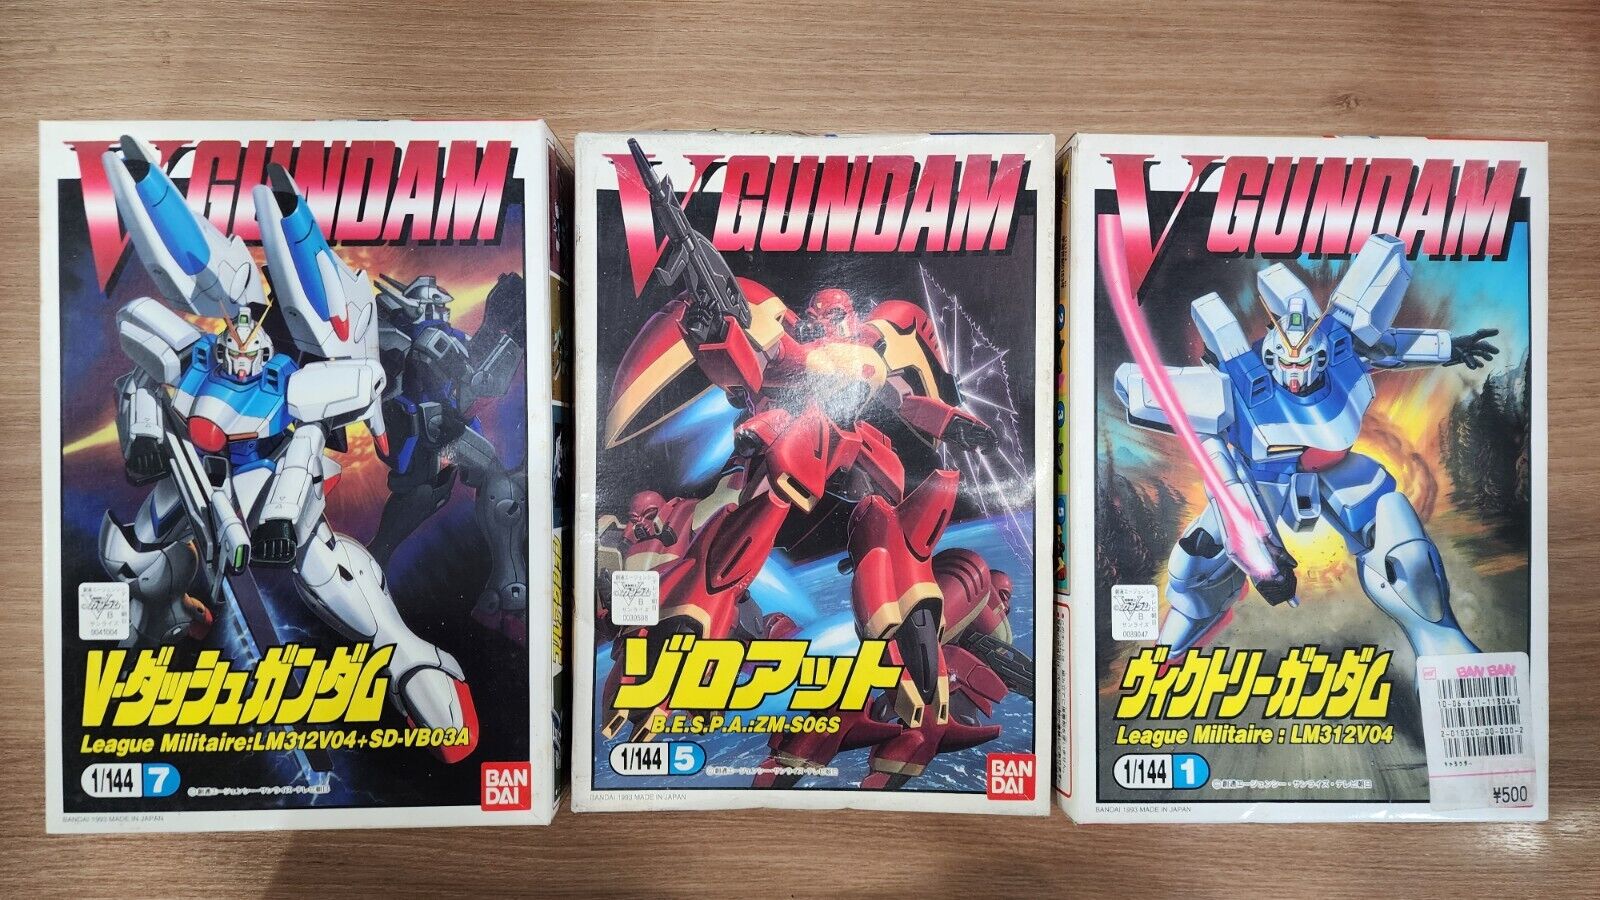 1/144 (3) Bandai V Gundam League Militaire LM312v04+SD-VB03A, B.E.S.P.A.:ZM-S06S